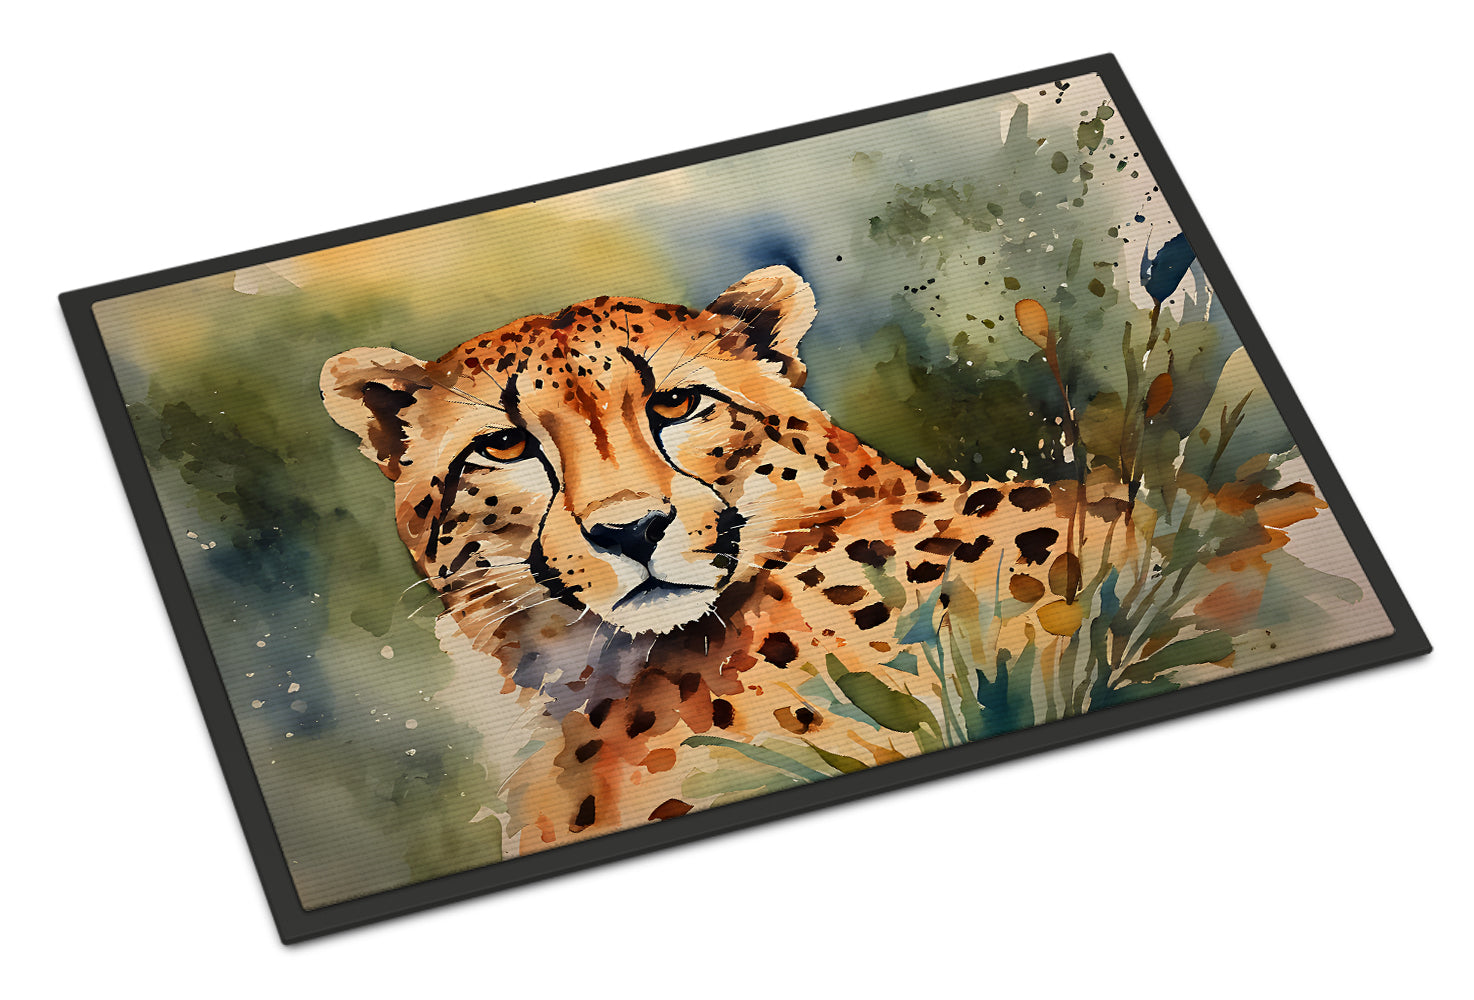 Buy this Cheetah Doormat